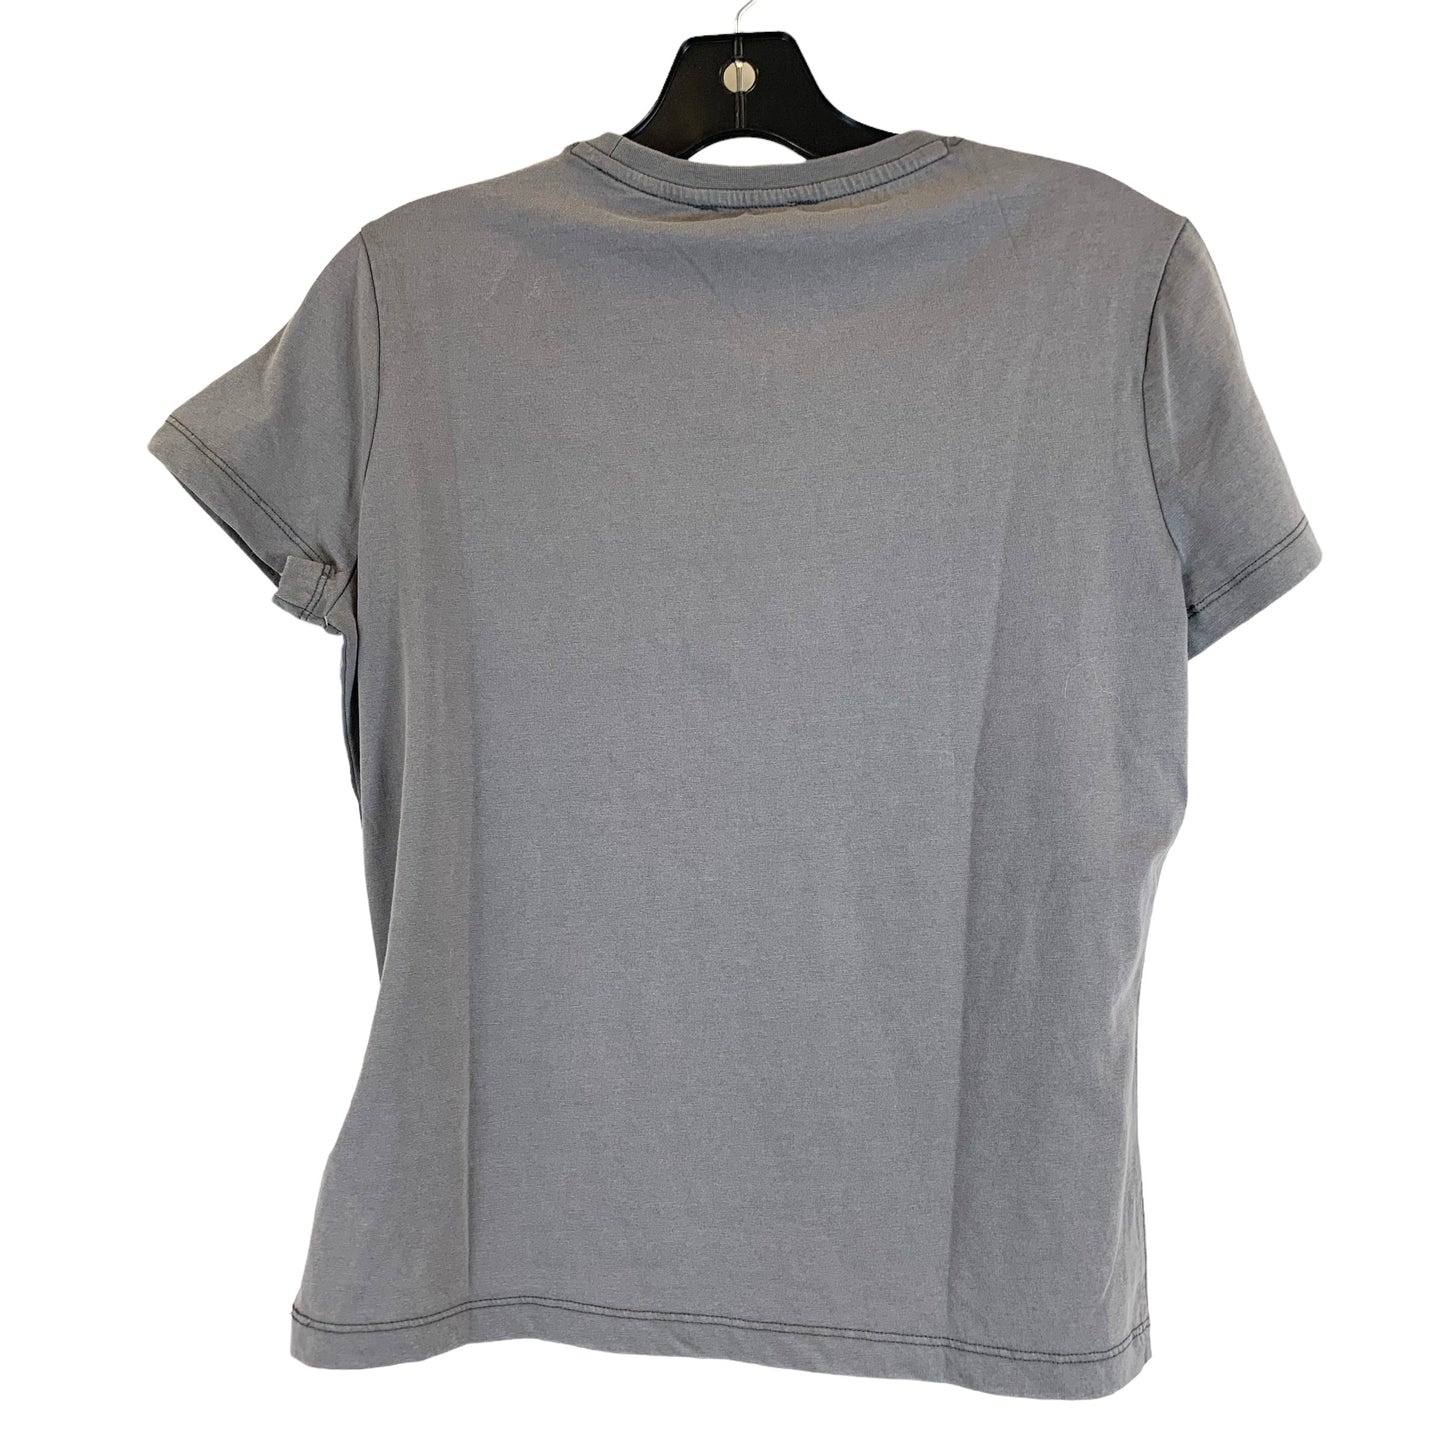 Grey Top Short Sleeve Desigual, Size M